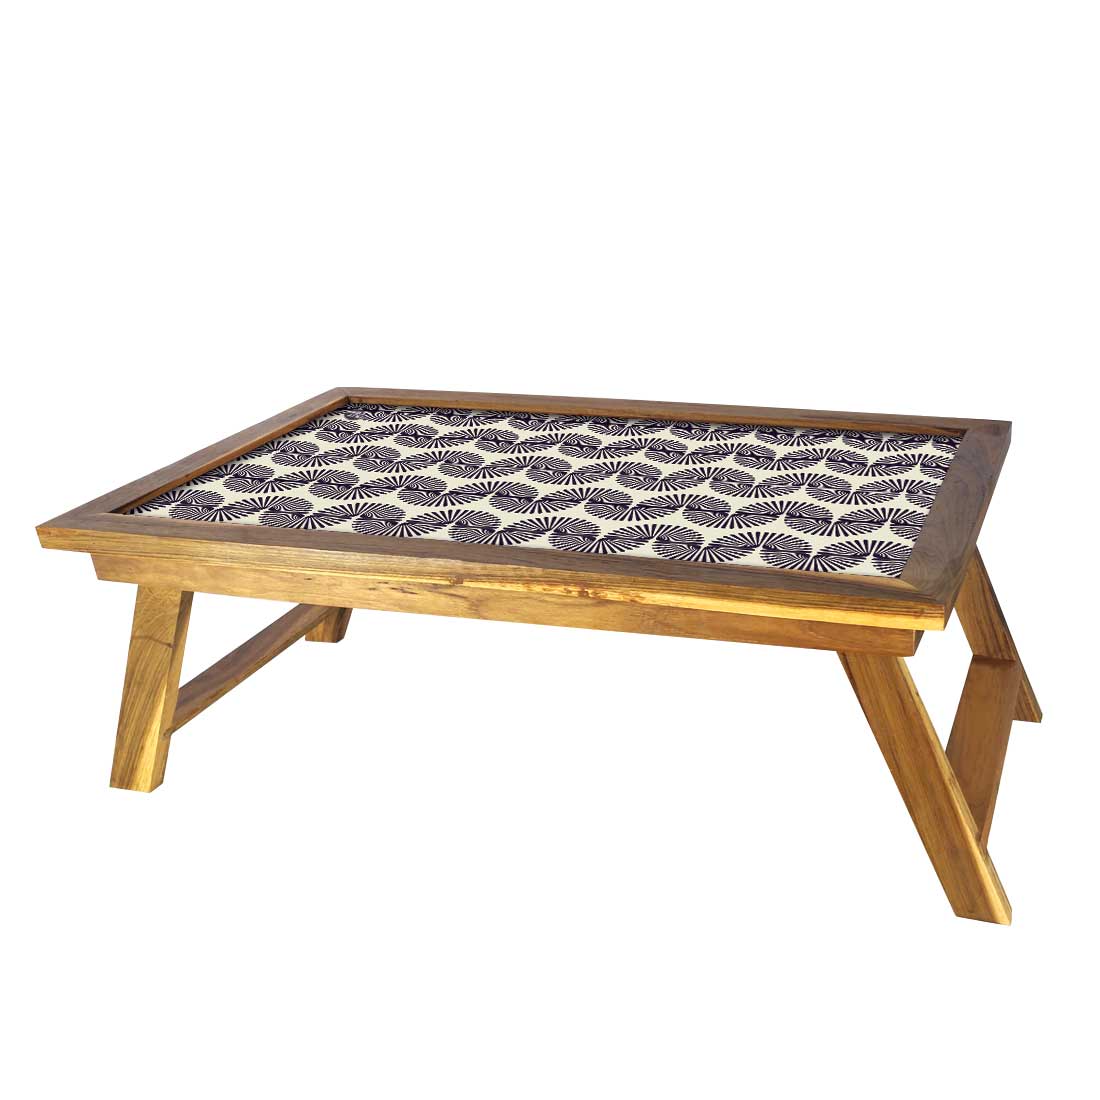 Nutcase Folding Laptop Table For Home Bed Lapdesk Breakfast Table Foldable Teak Wooden Study Desk - Beautiful Retro Pattern Nutcase